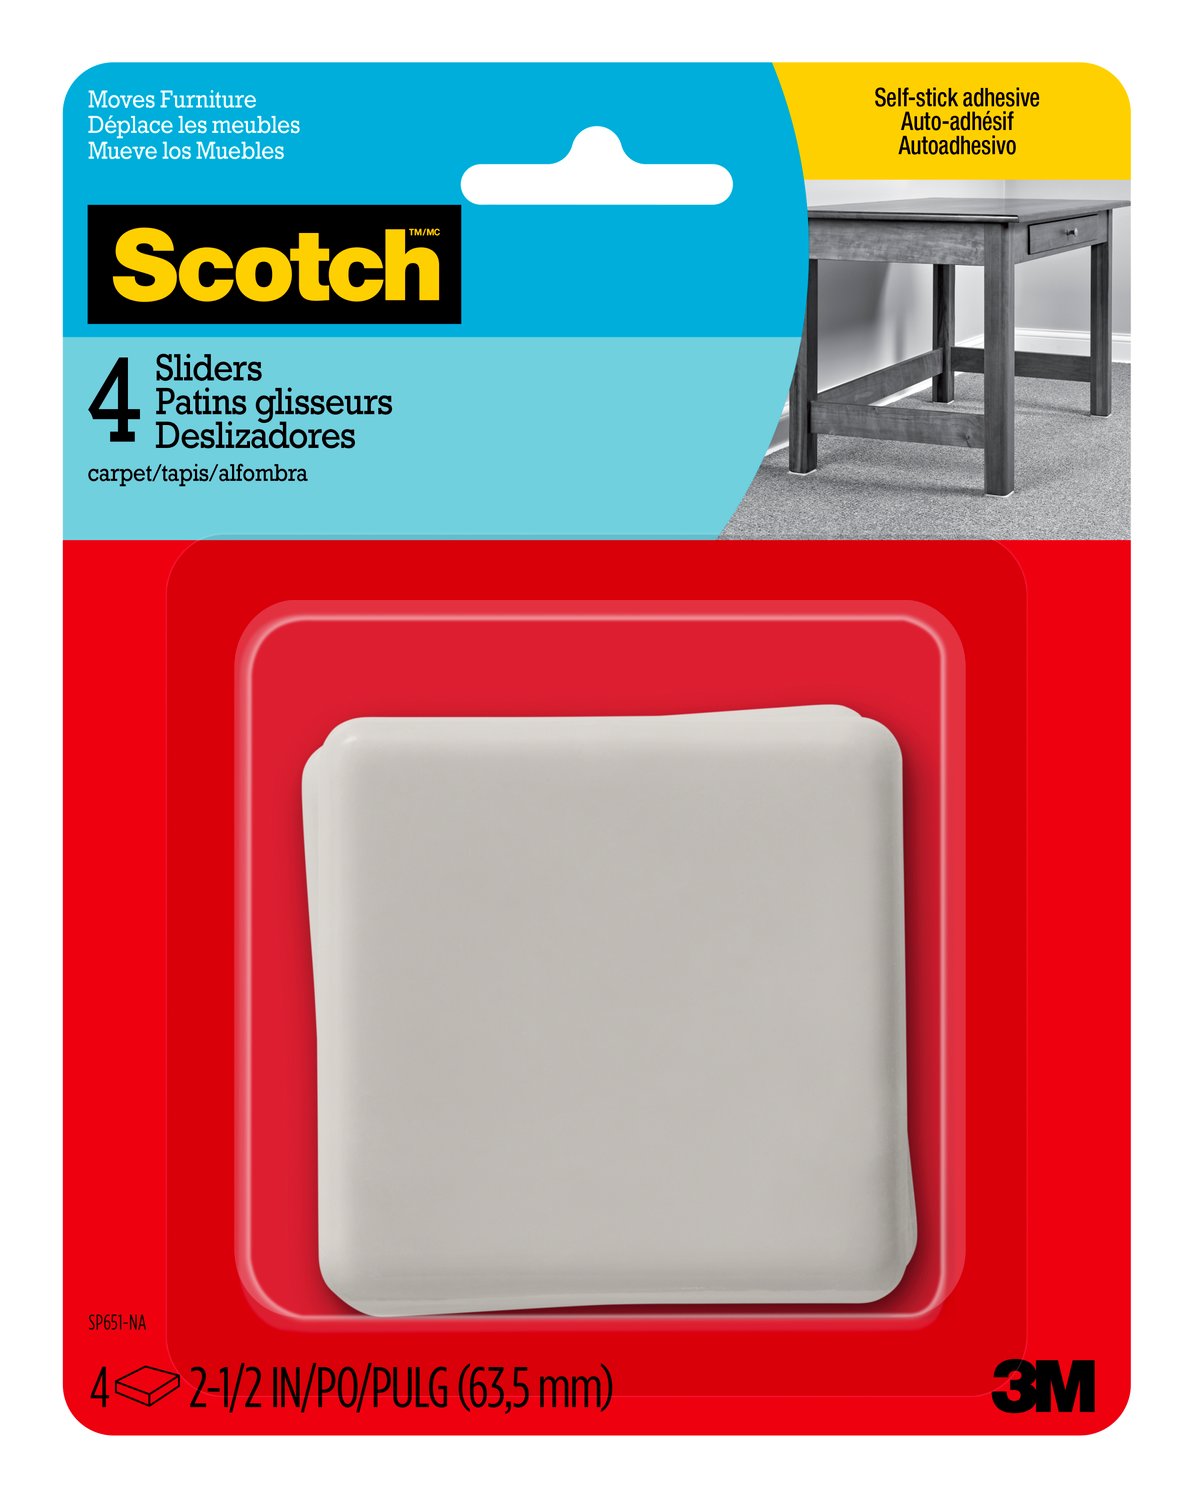 7100189317 - Scotch Sliders SP651-NA, Adhesive Hard Square 2.5-In 4/Pk